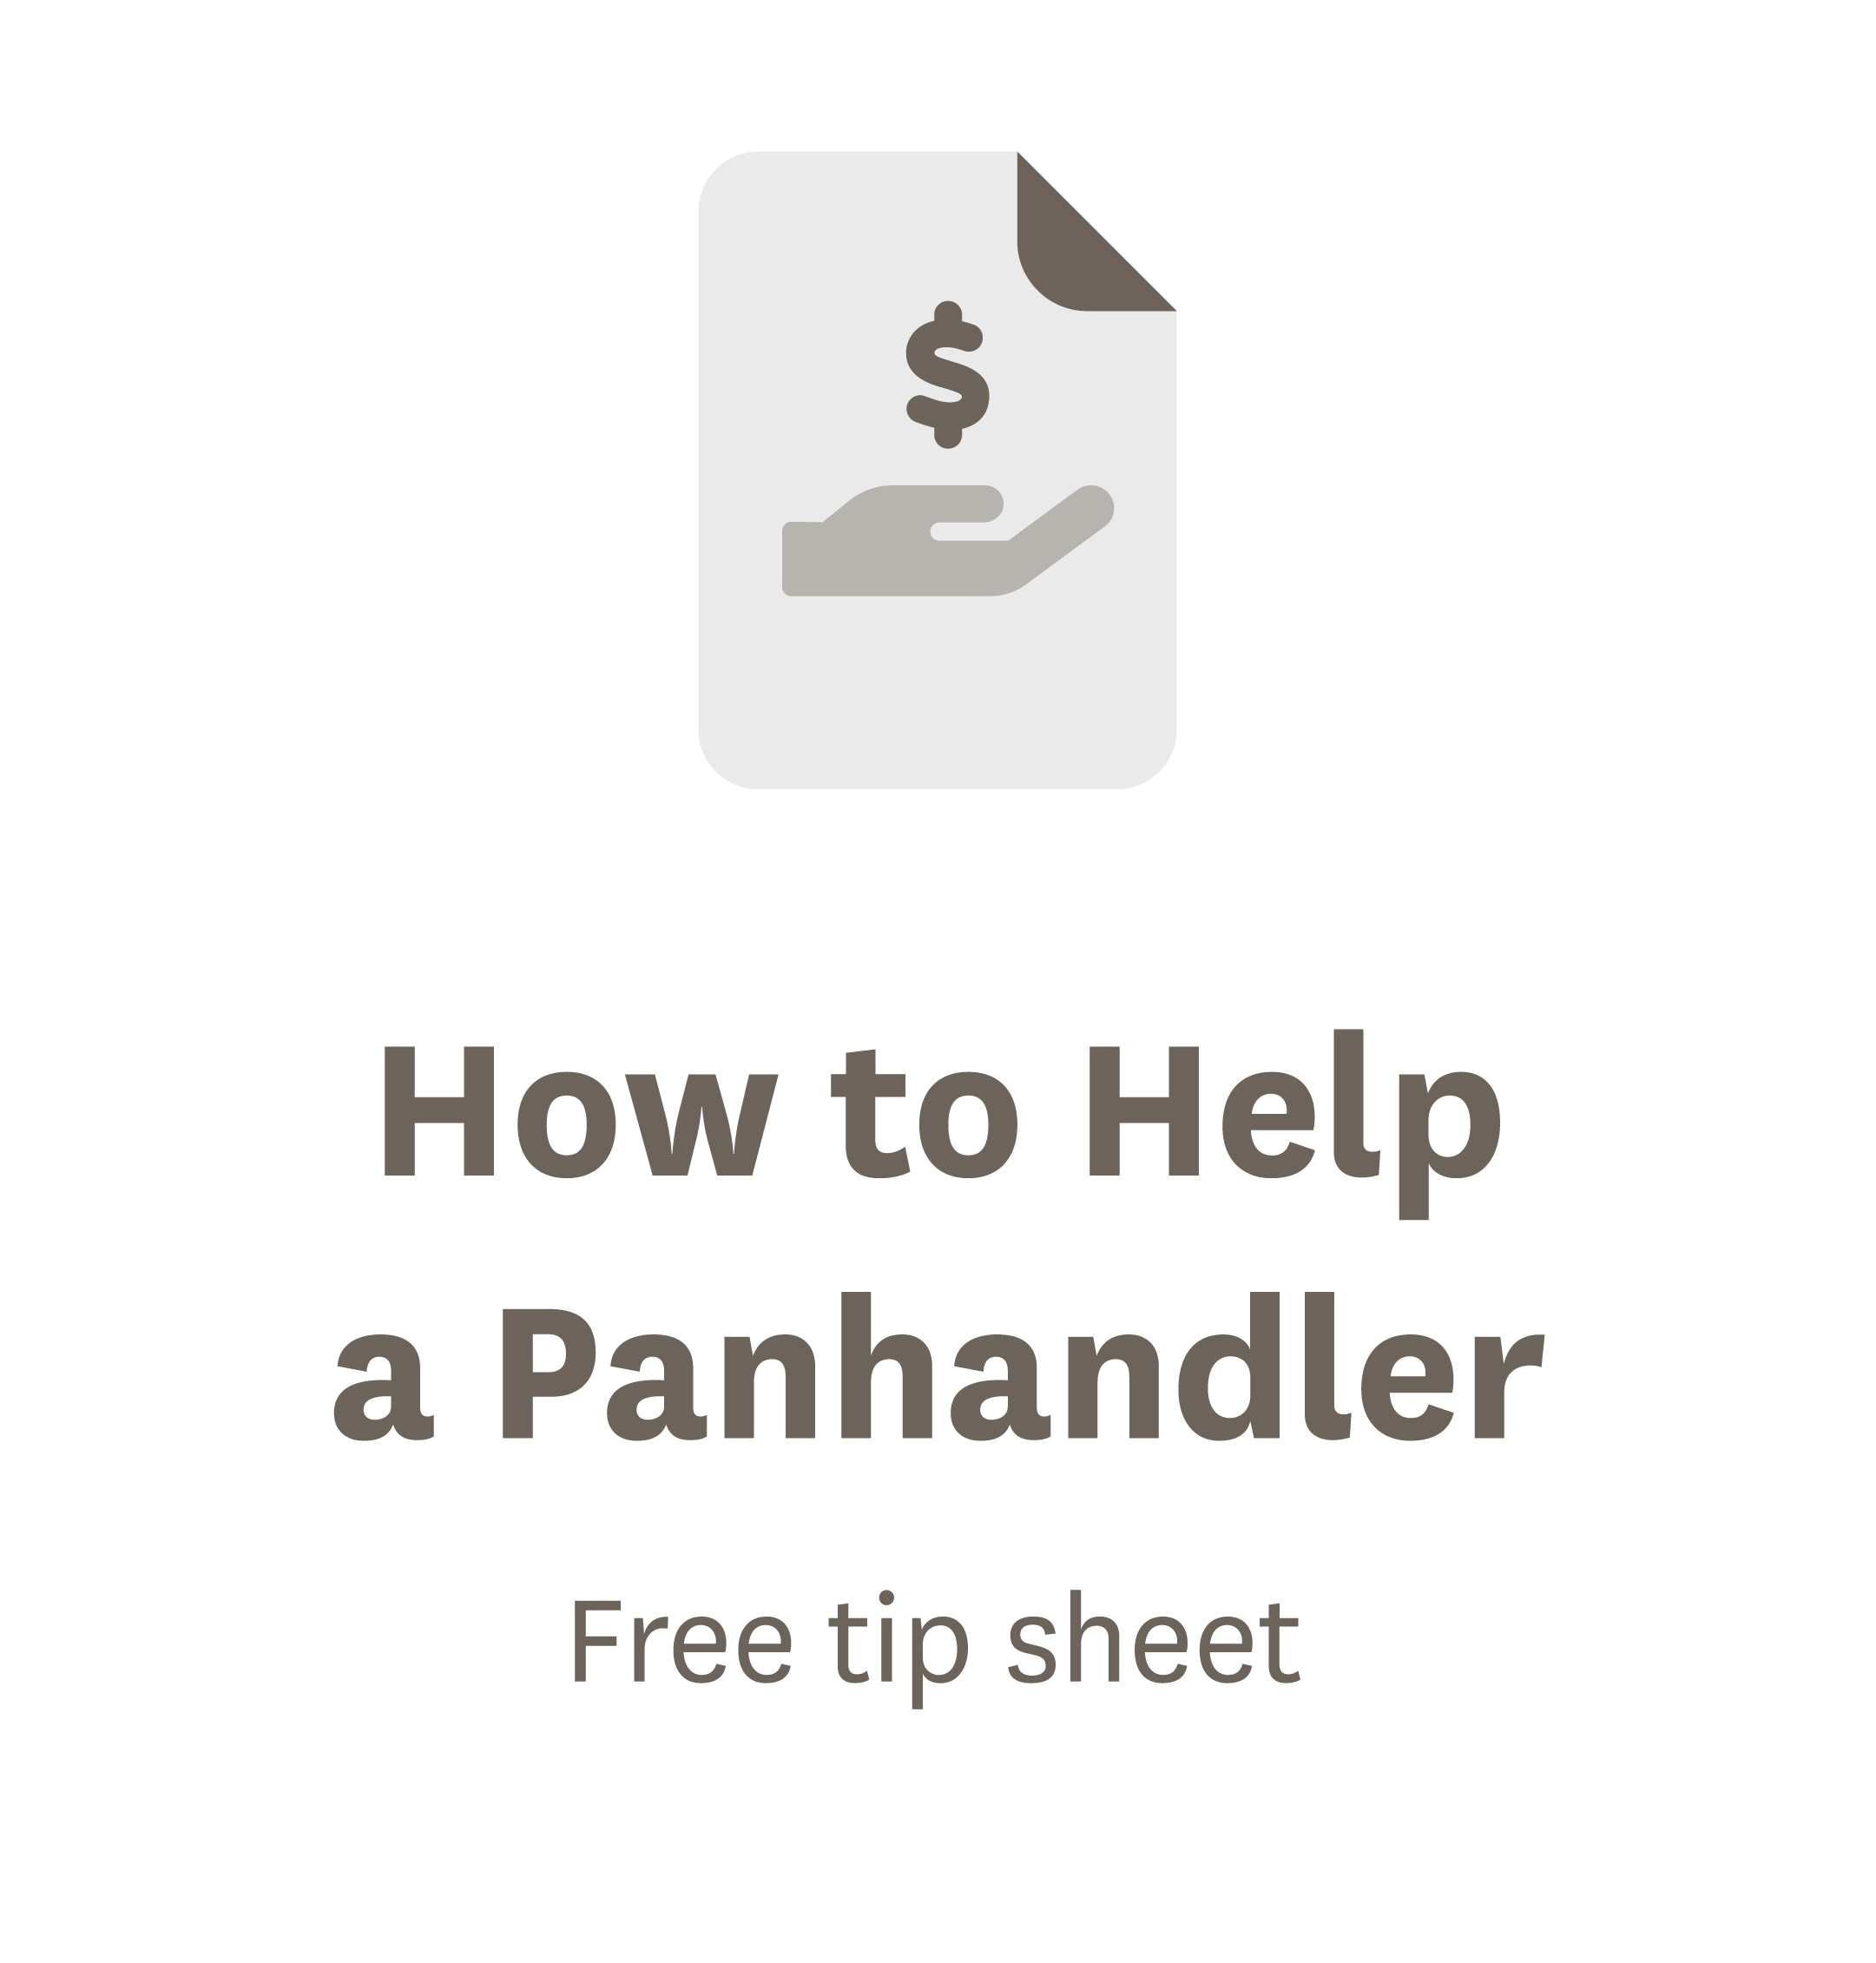 Free tip sheet - How to Help a Panhandler